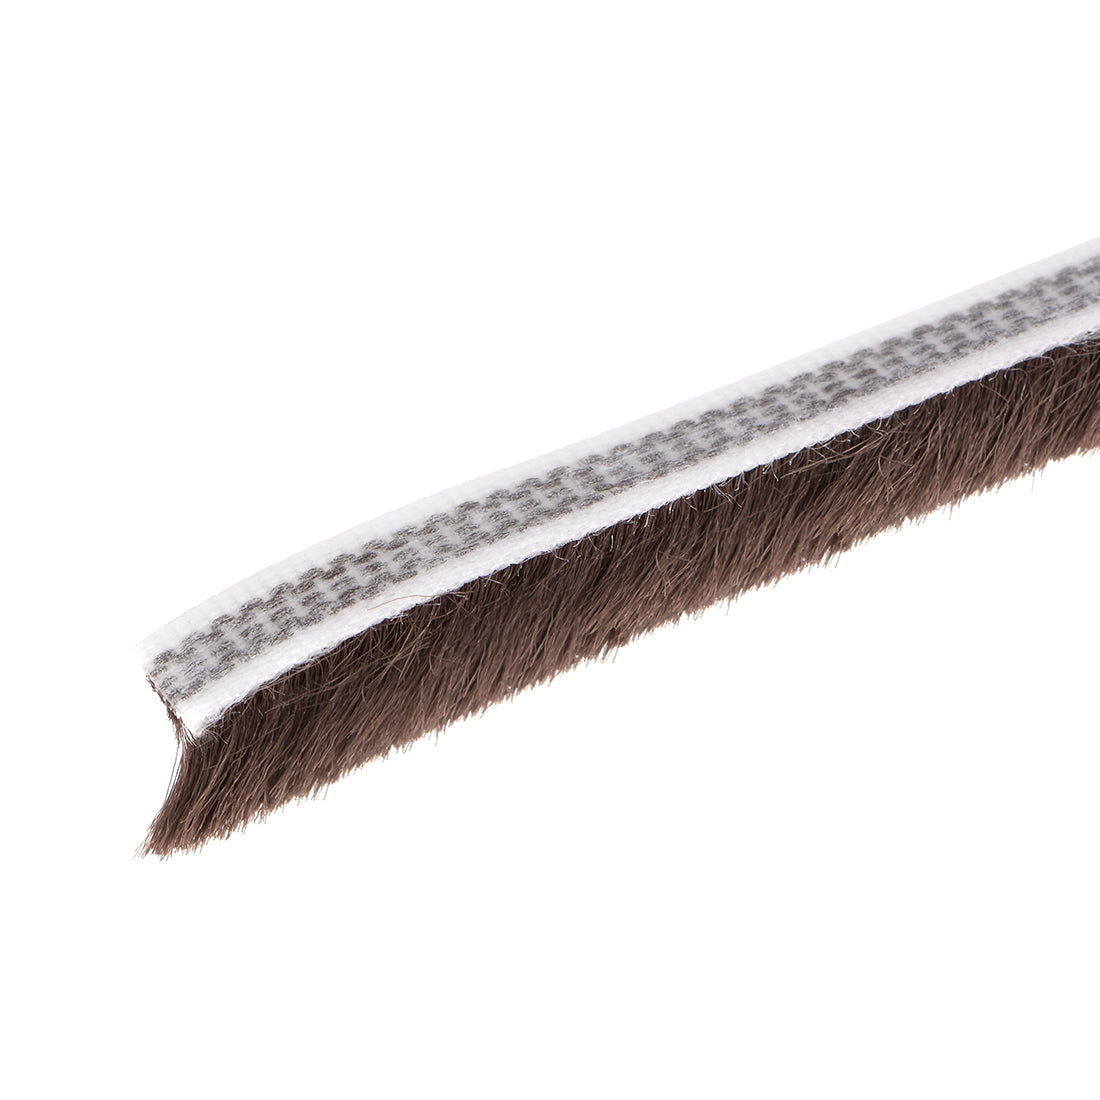 Uxcell Uxcell Brush Weather Stripping,Adhesive Felt Door Seal Strip Pile Weatherstrip Door Sweep Brush for Door Window 590.6Inch L x 0.6Inch W(15000mm x 15mm)Brown